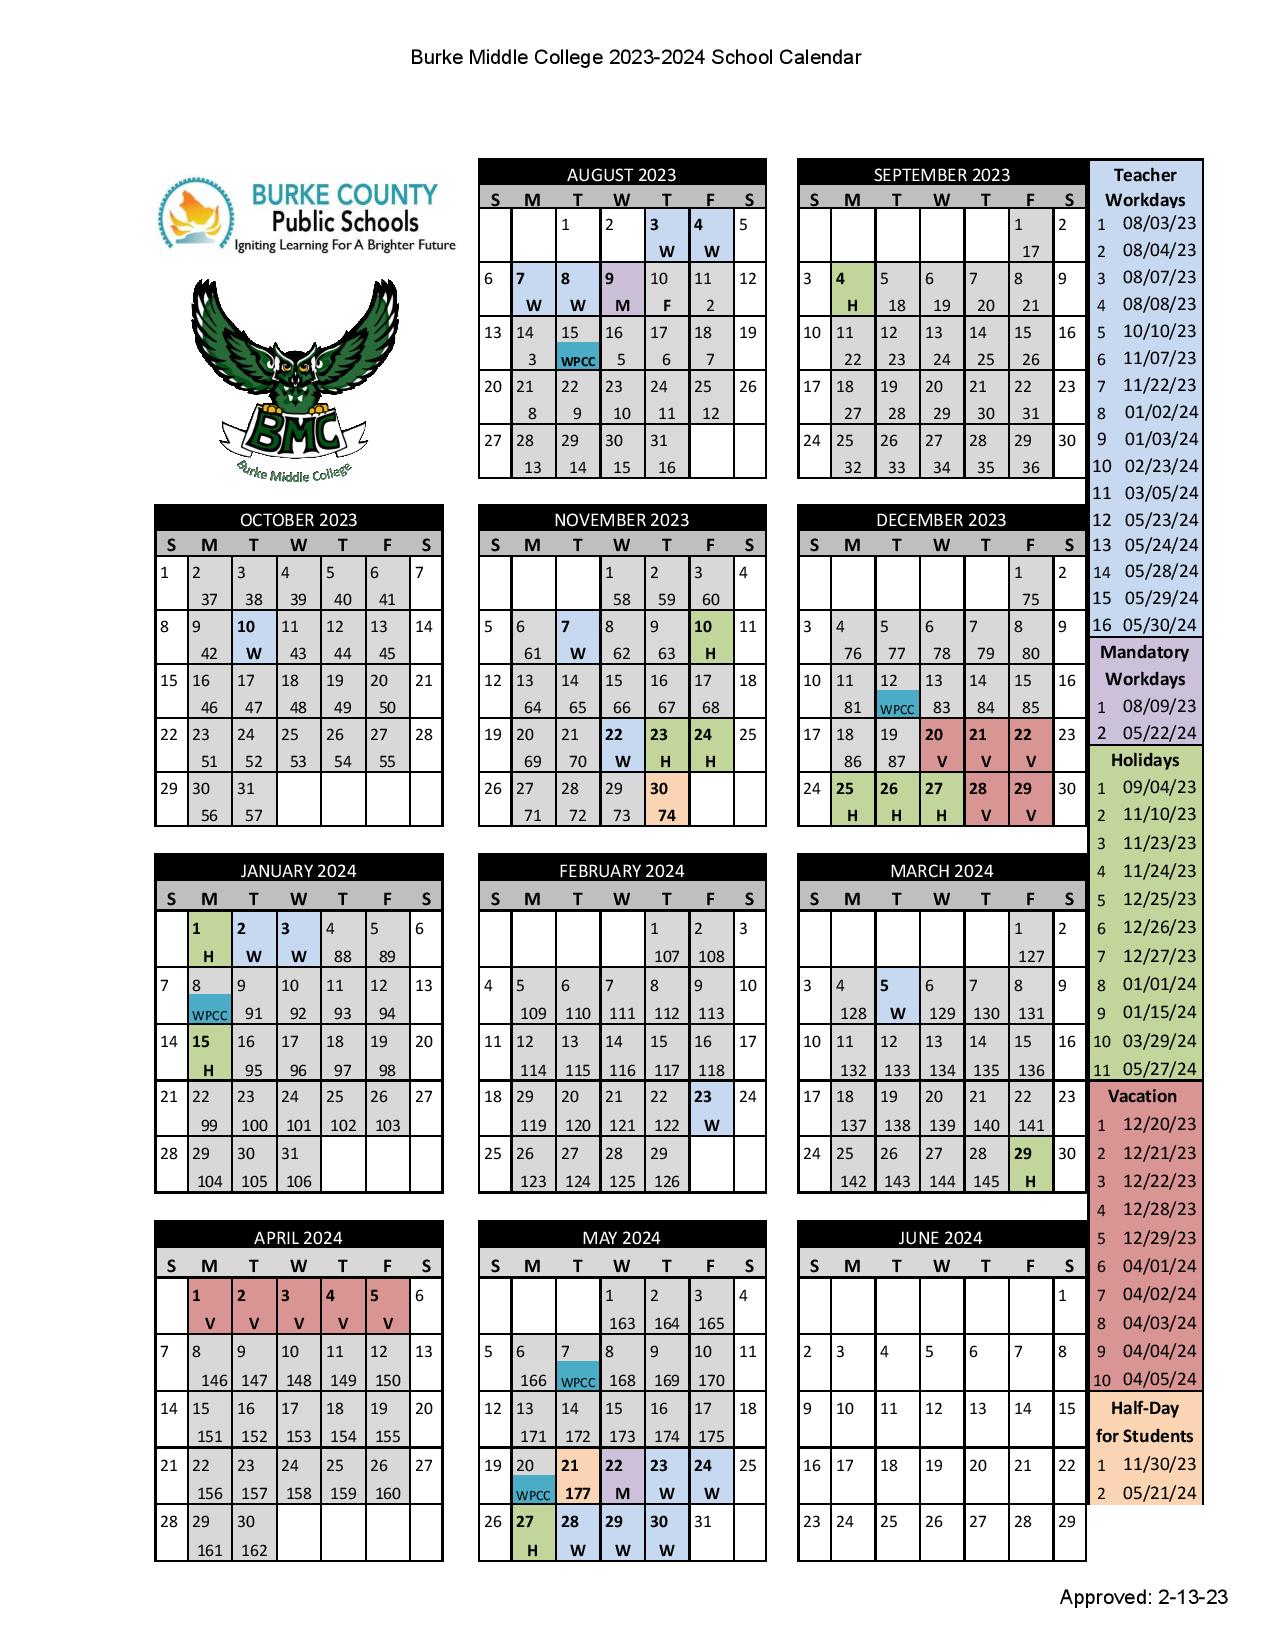 Burke County Schools Calendar 20232024 in PDF